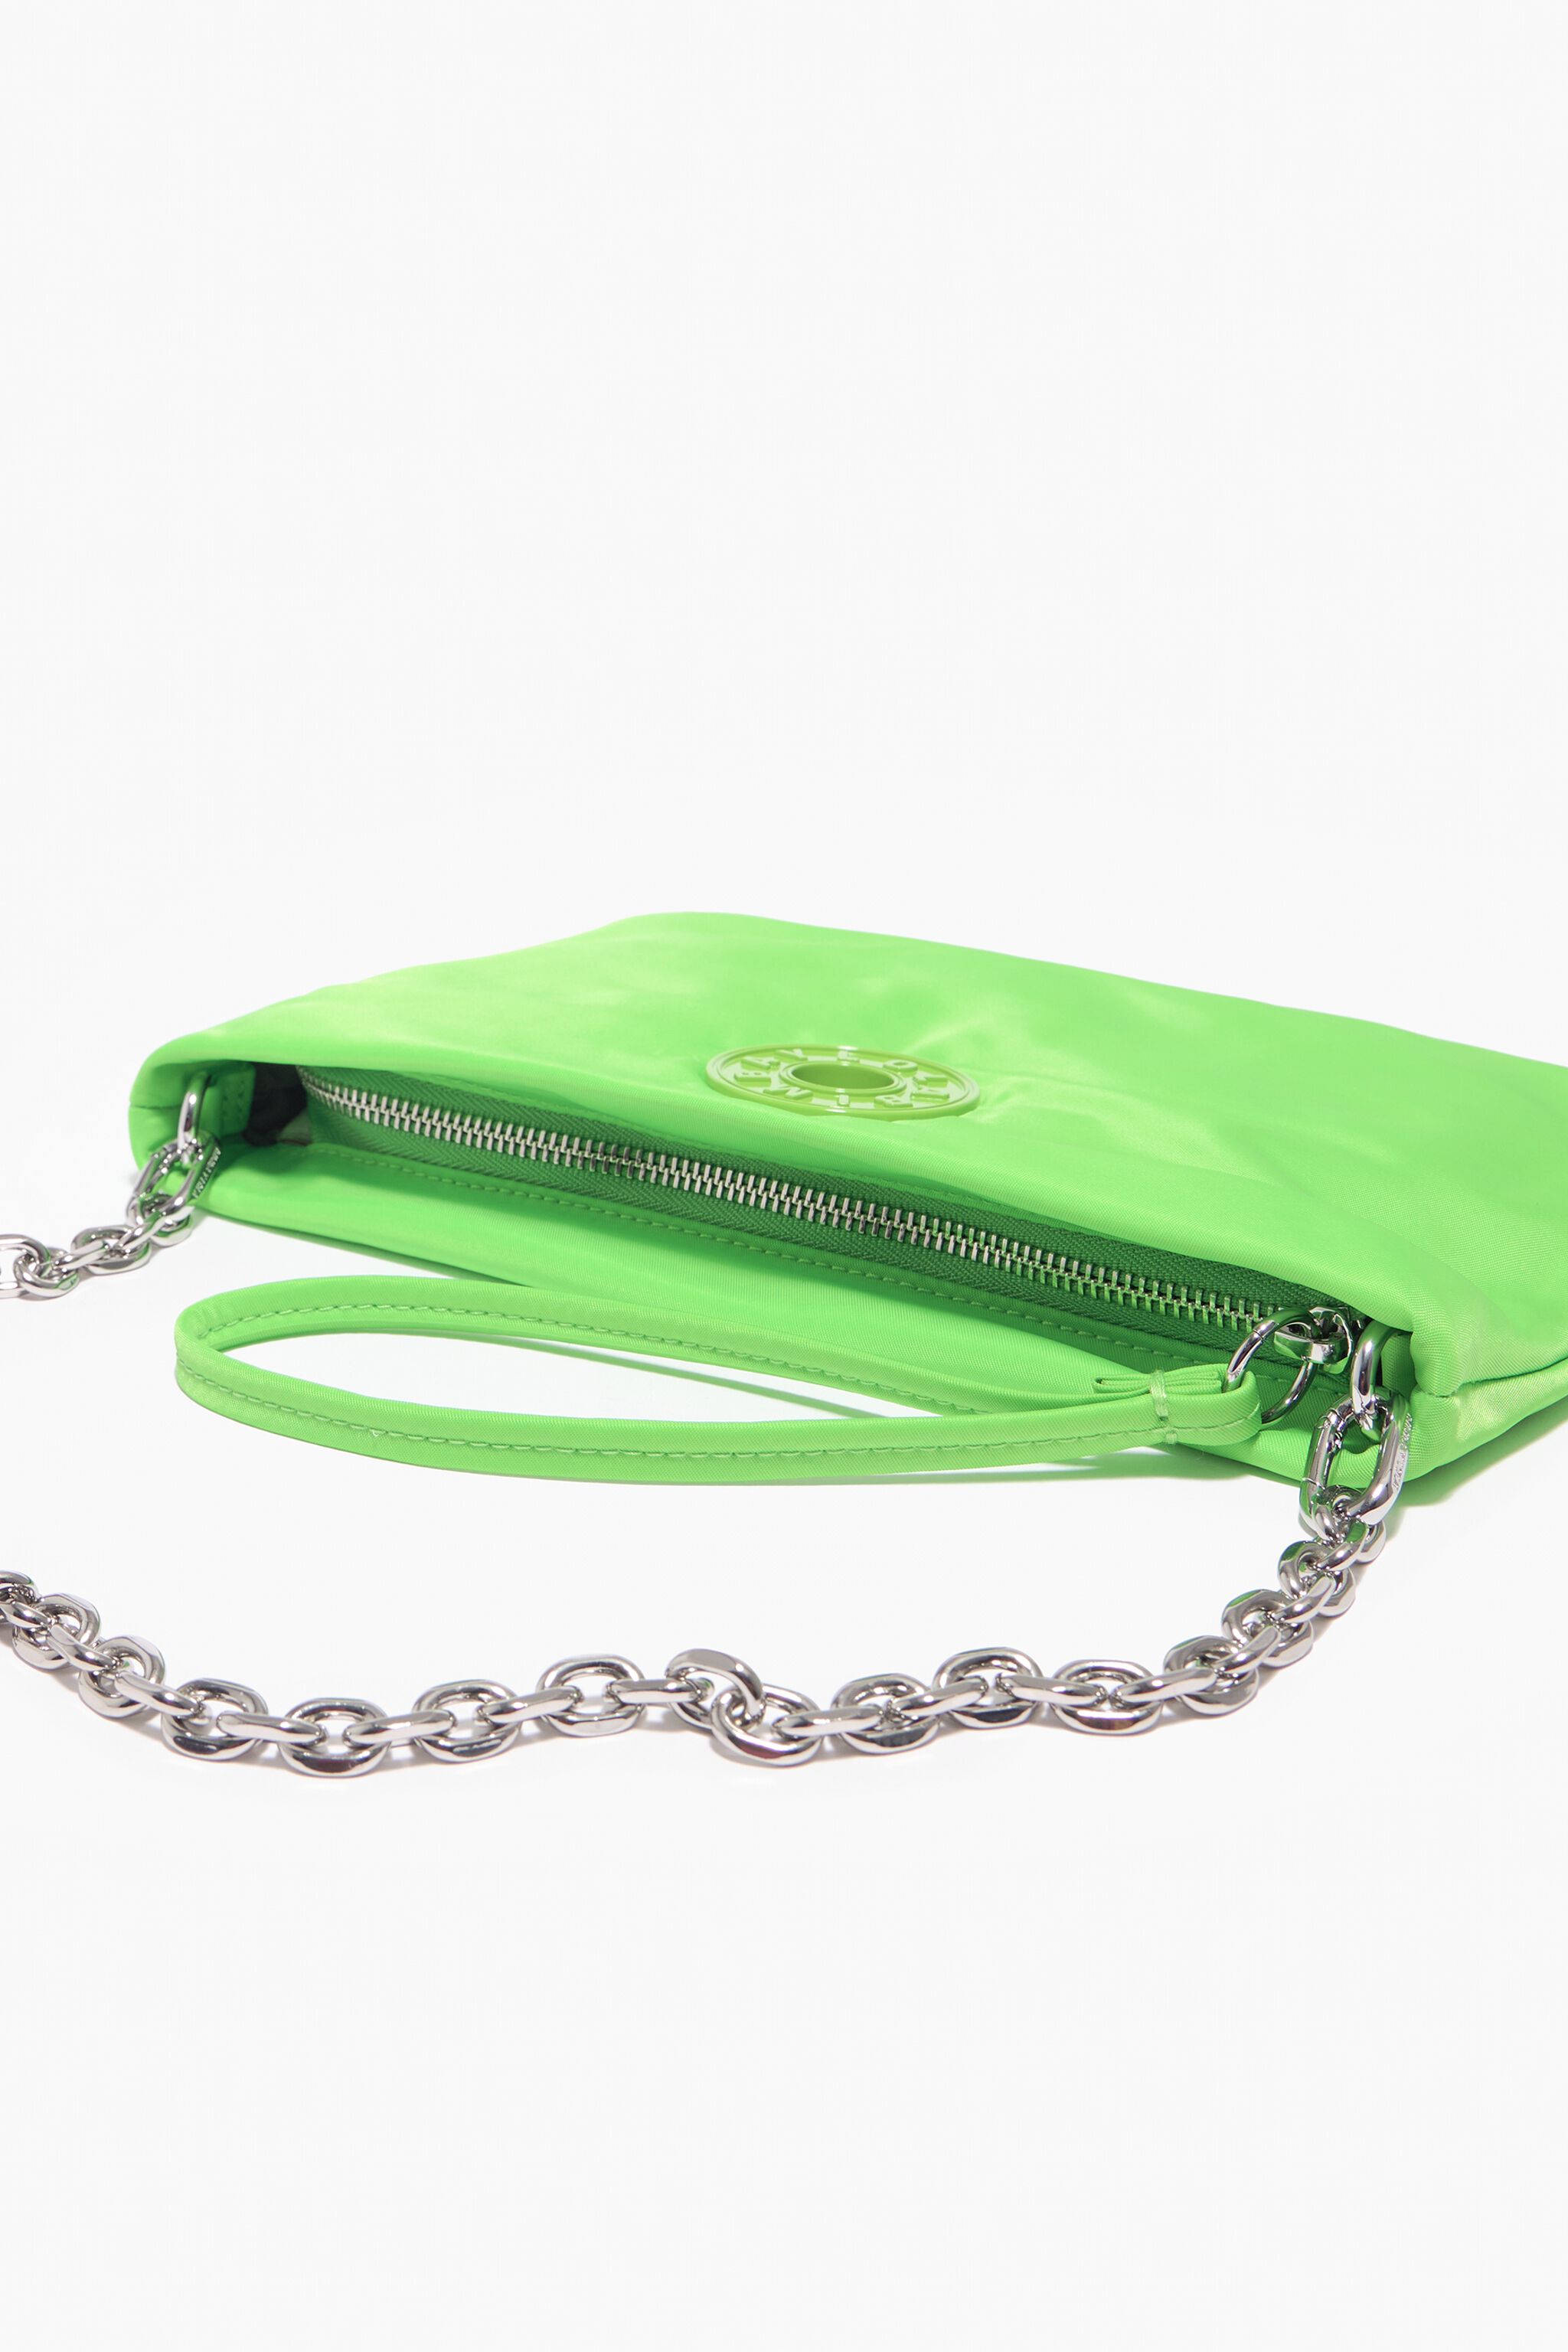 Green Crystal Bag , Crystal Handbag ,Neon Crystal Clutch , Basket Purse, |  eBay